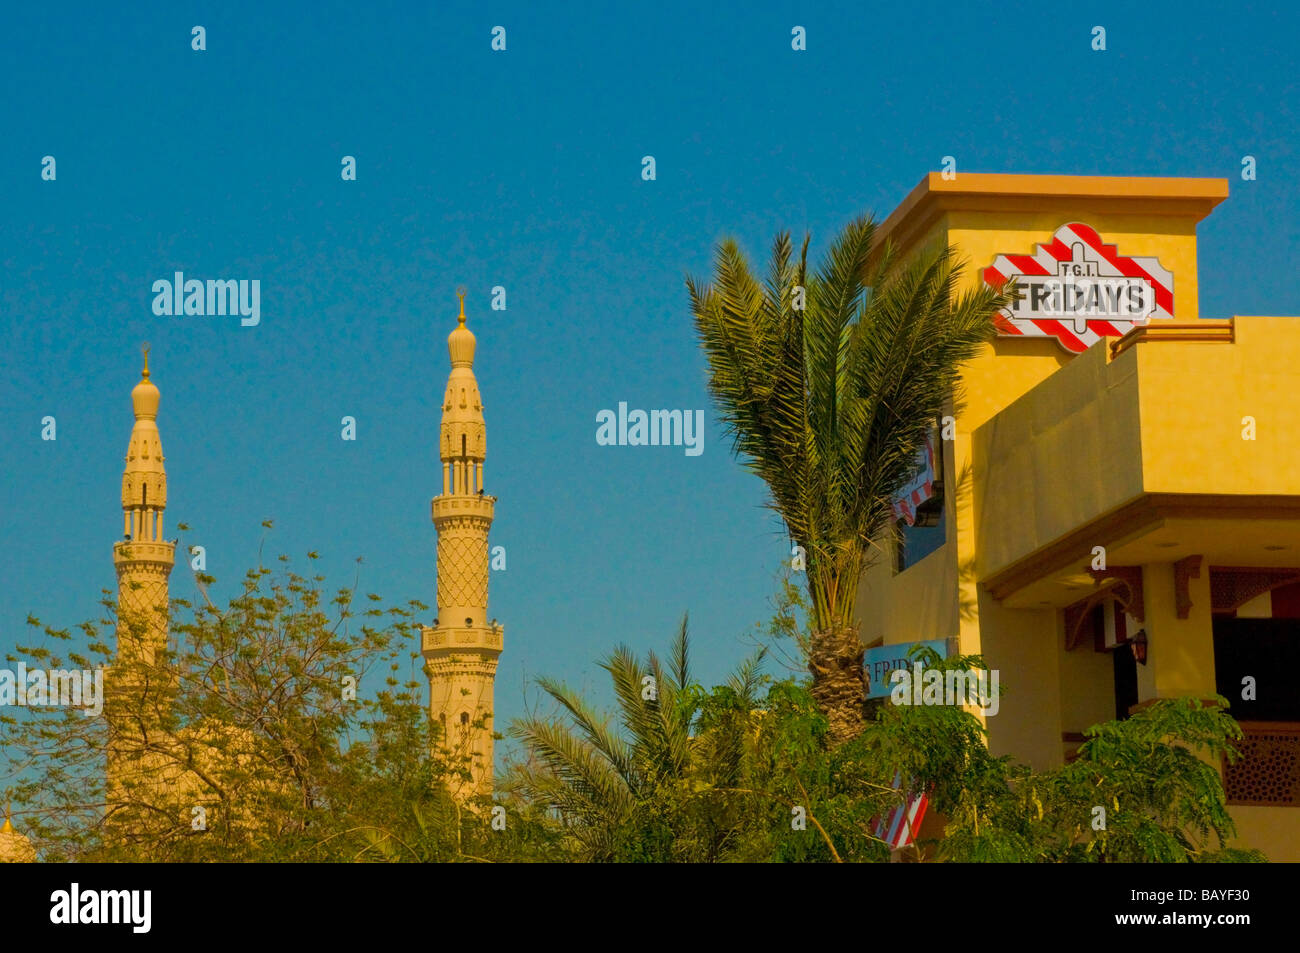 Dubai Jumeirah Moschee und TG Fridays Kette Stockfoto